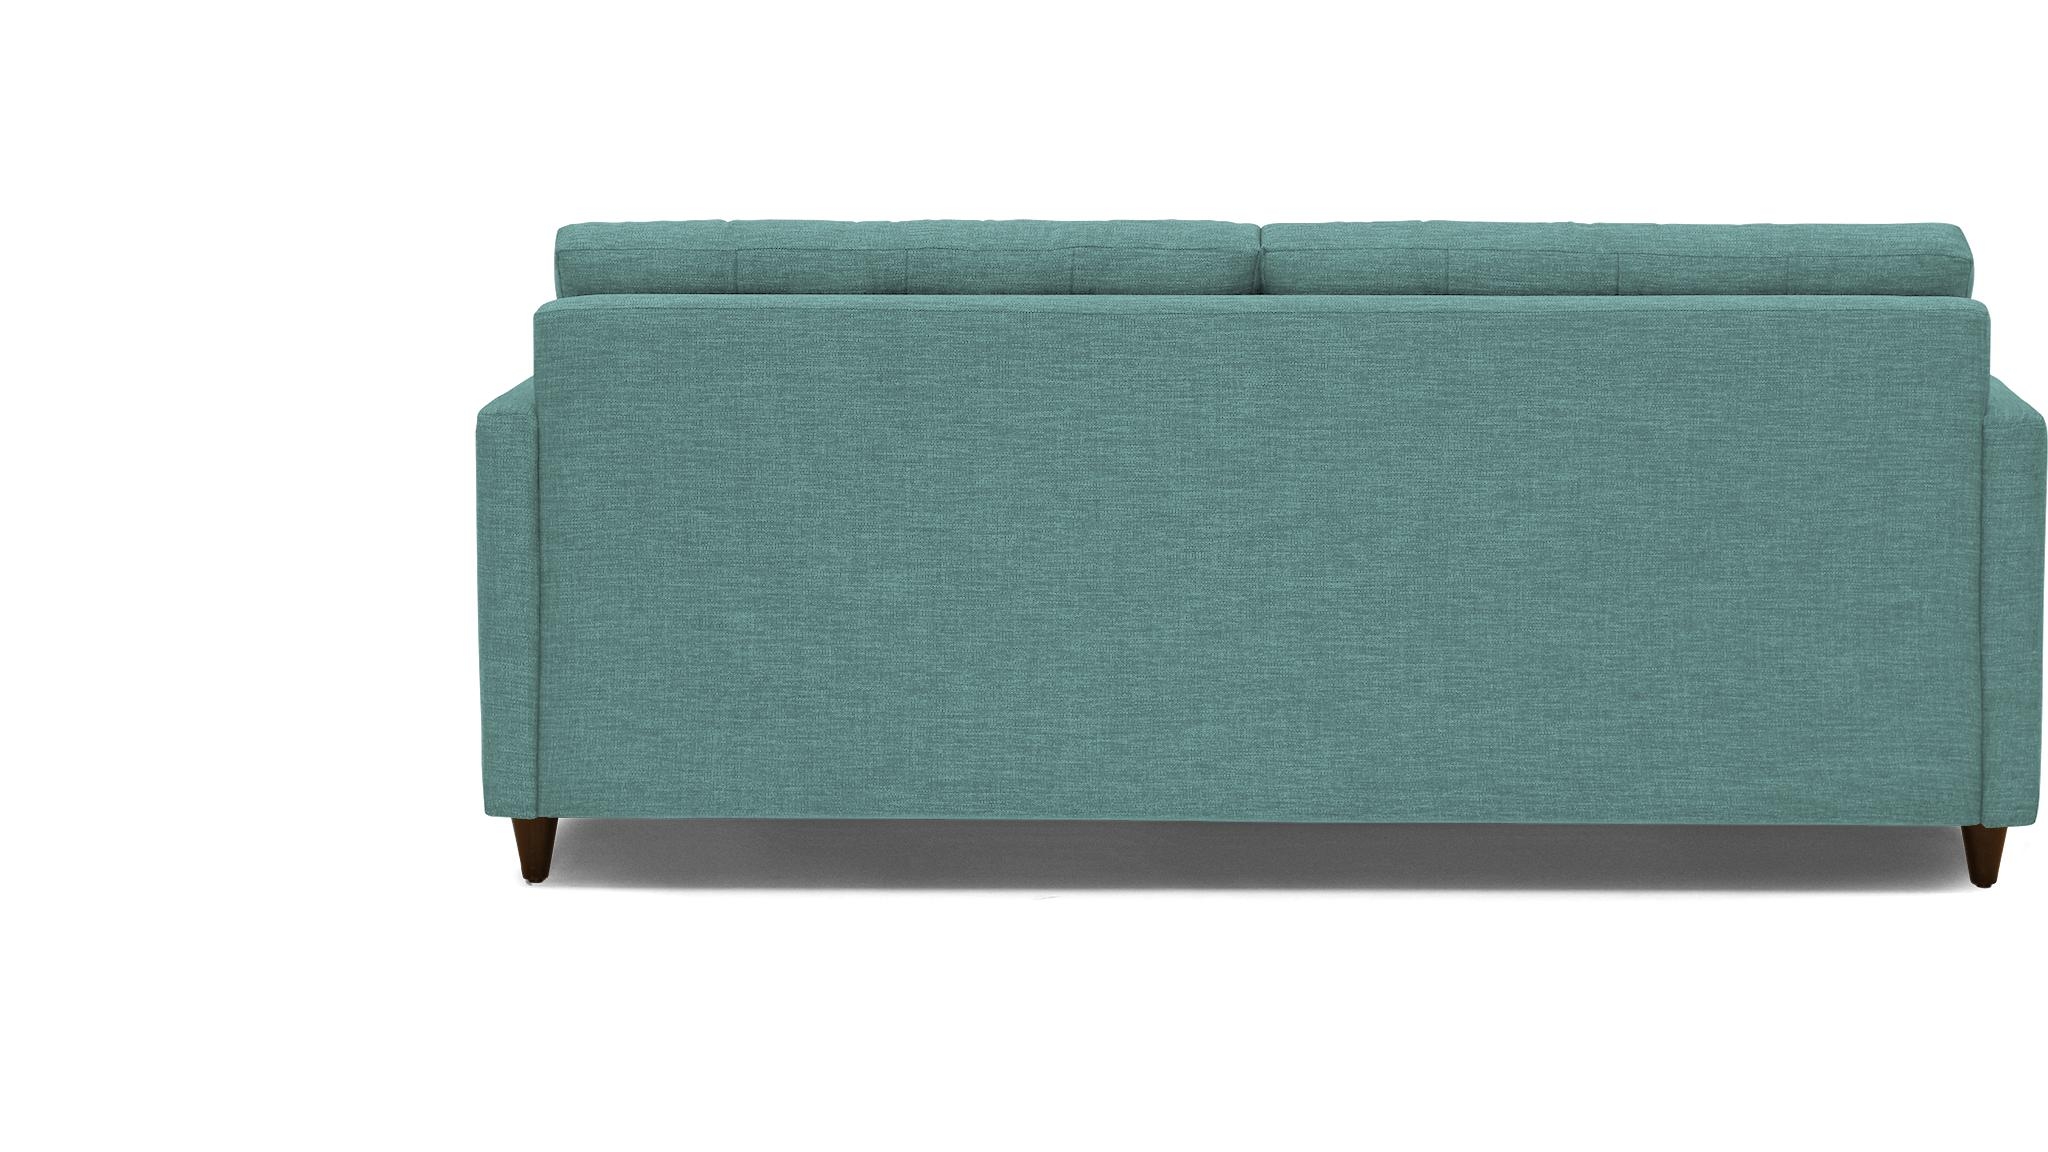 Green Eliot Mid Century Modern Sleeper Sofa - Essence Aqua - Mocha - Foam - Image 4